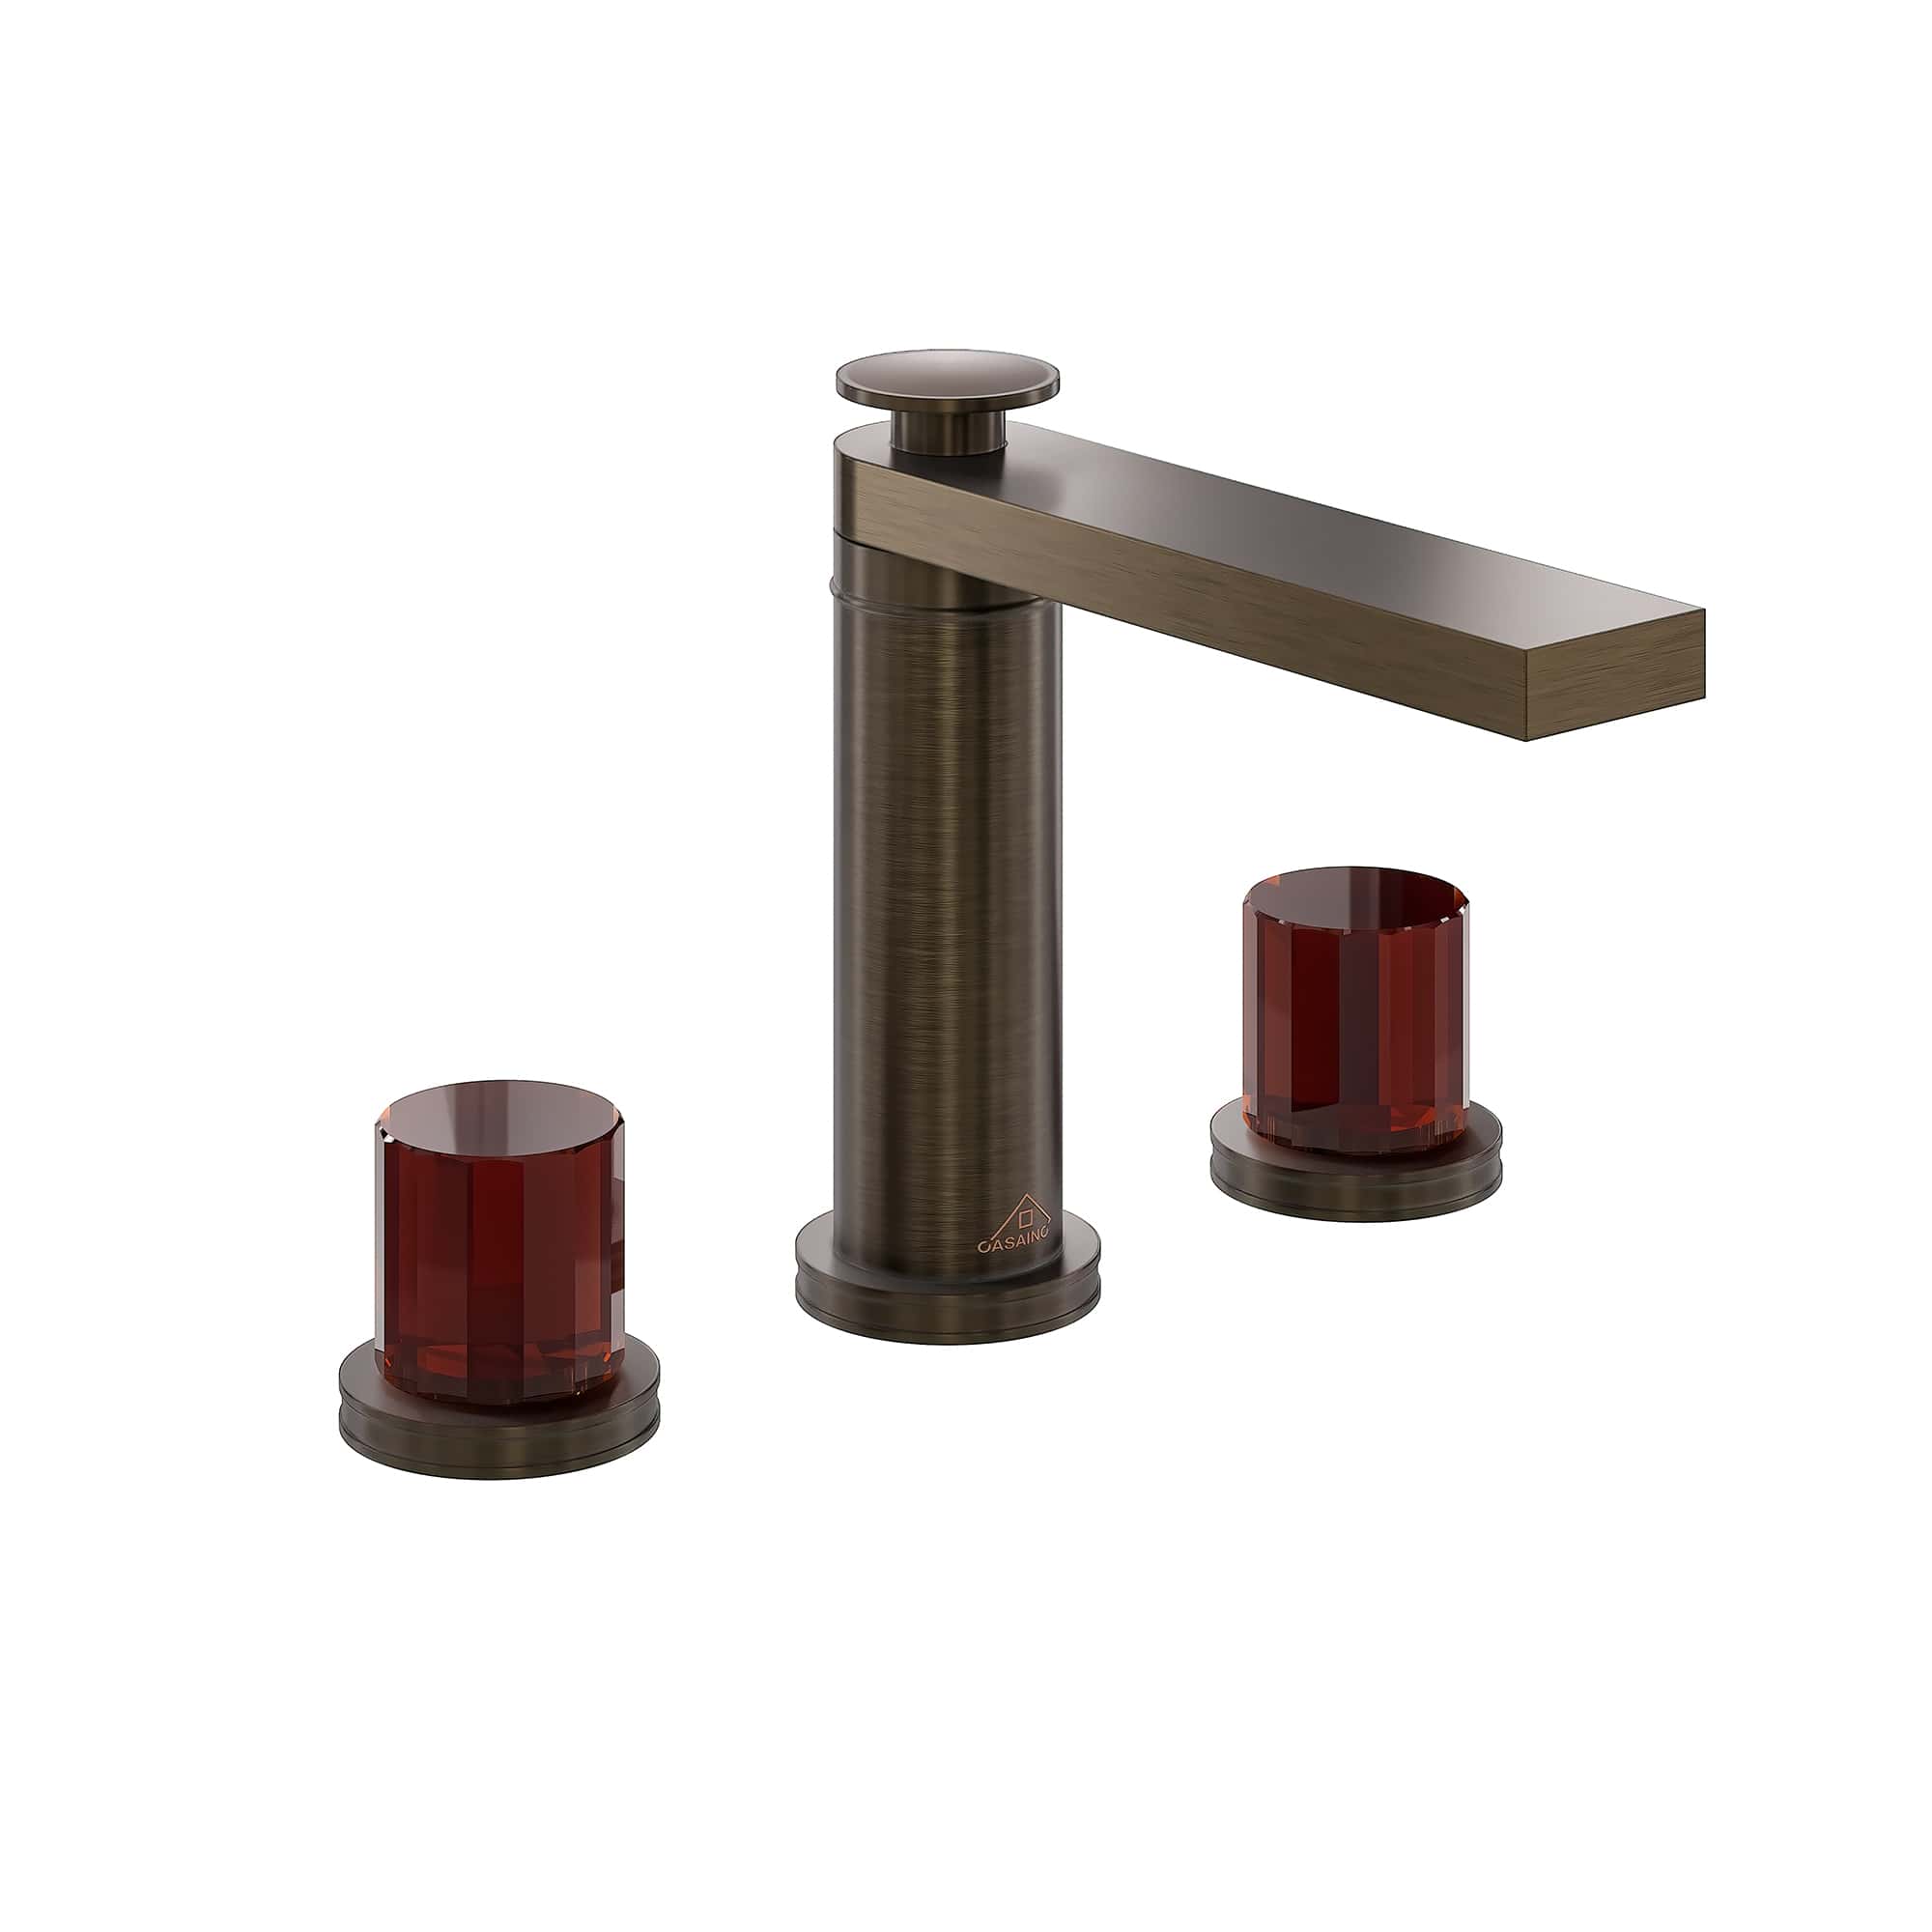 CASAINC Brown Bronze Double Glazed Handle Basin Faucet with Drain